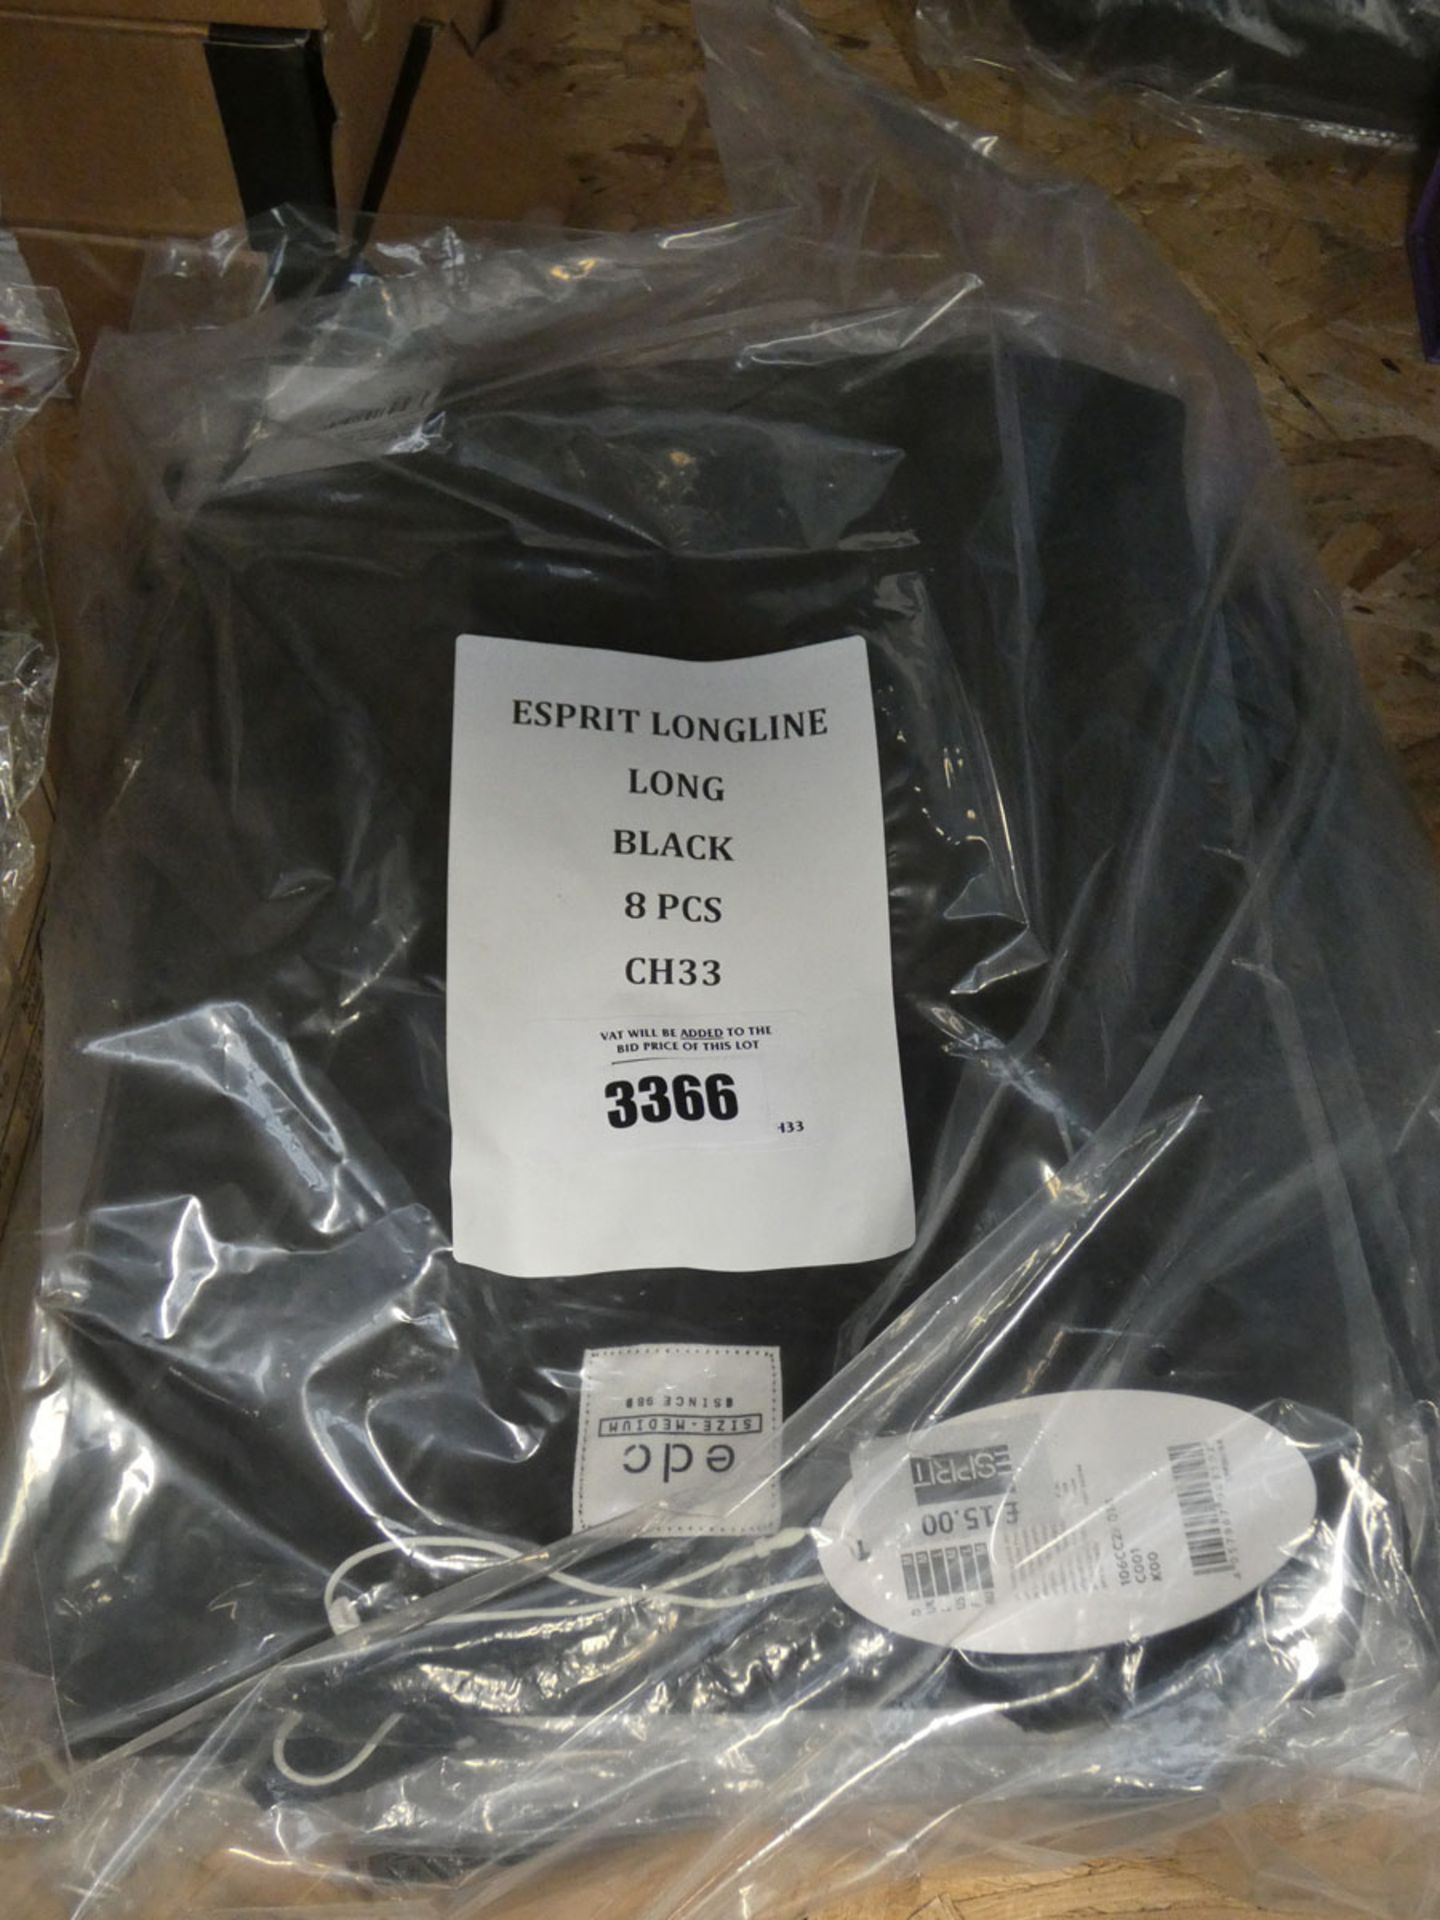 Bag containing 8 Espirit long line in black